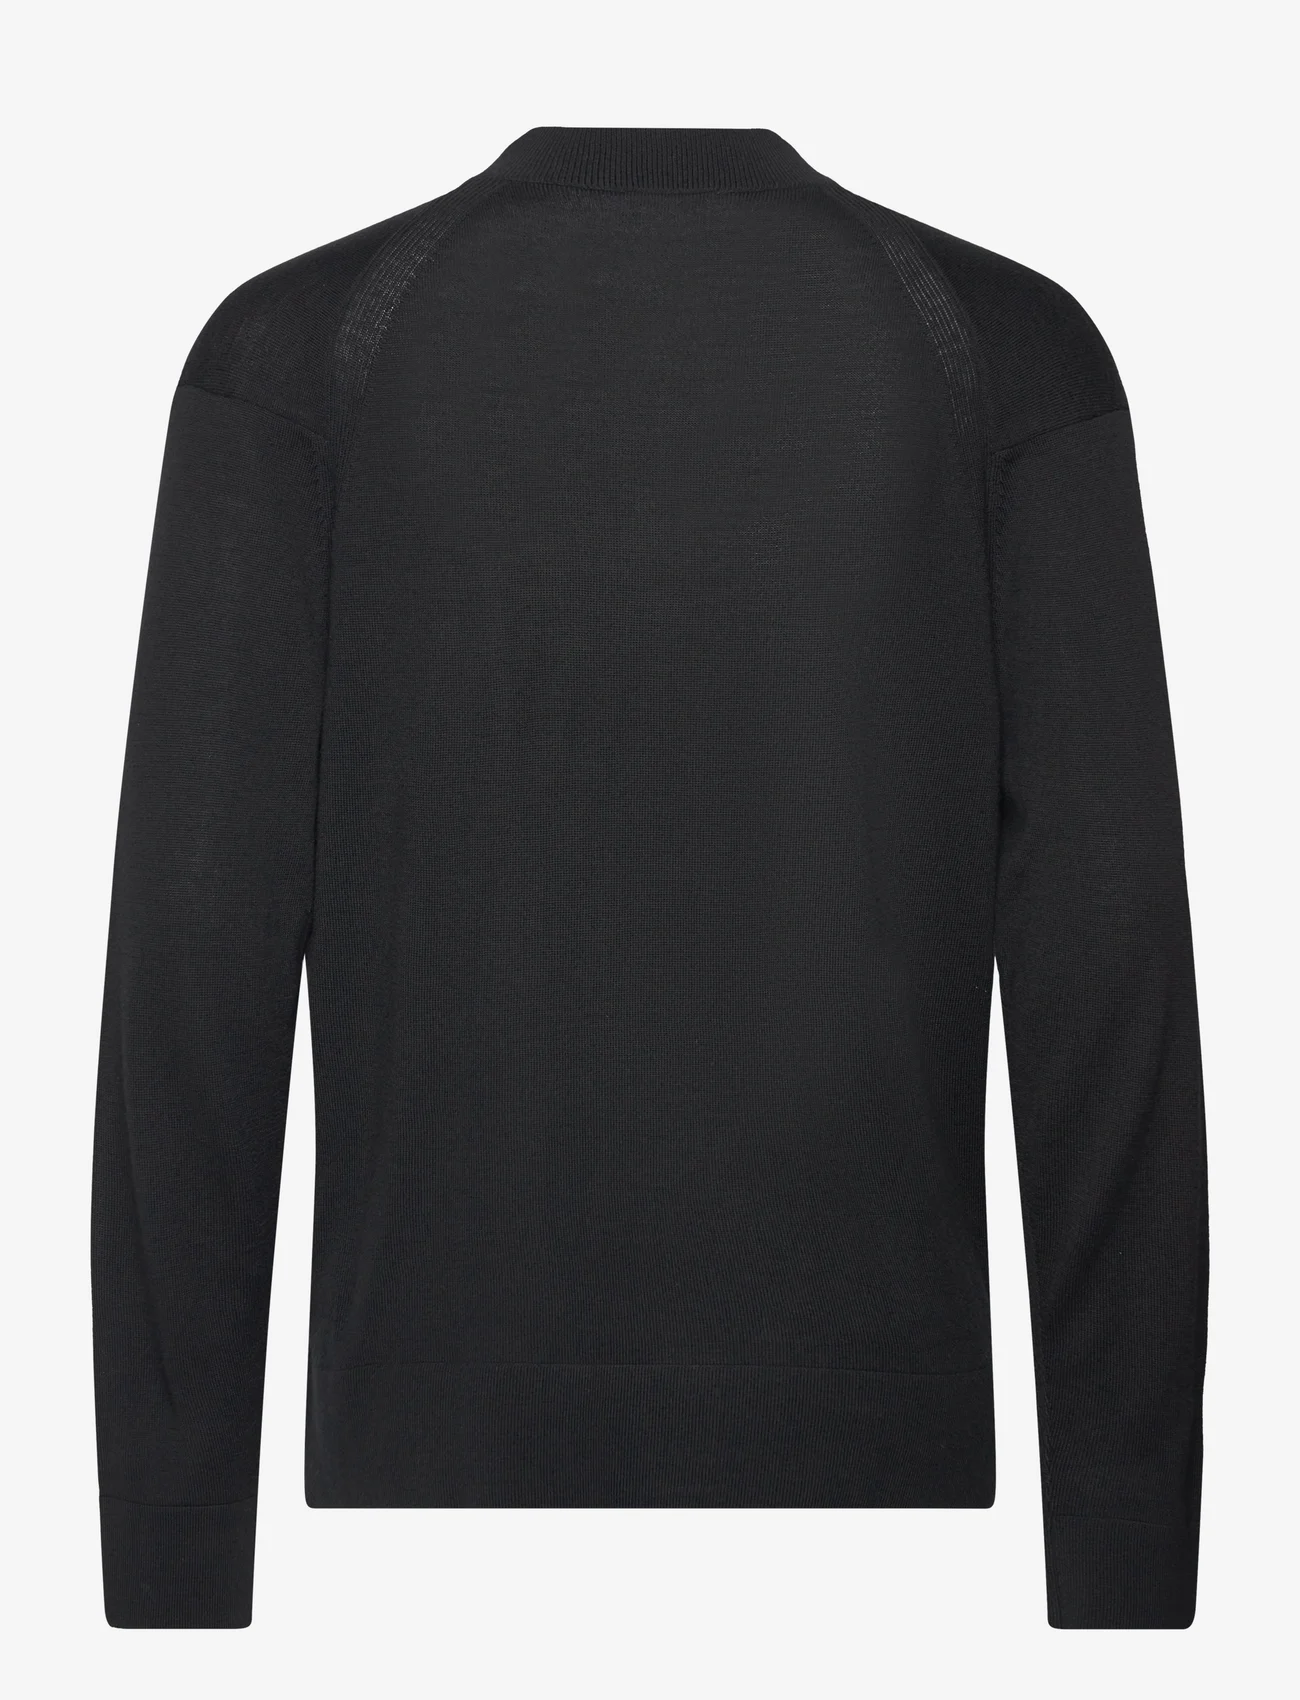 Calvin Klein - MERINO MINI MOCK NECK SWEATER - knitted round necks - ck black - 1